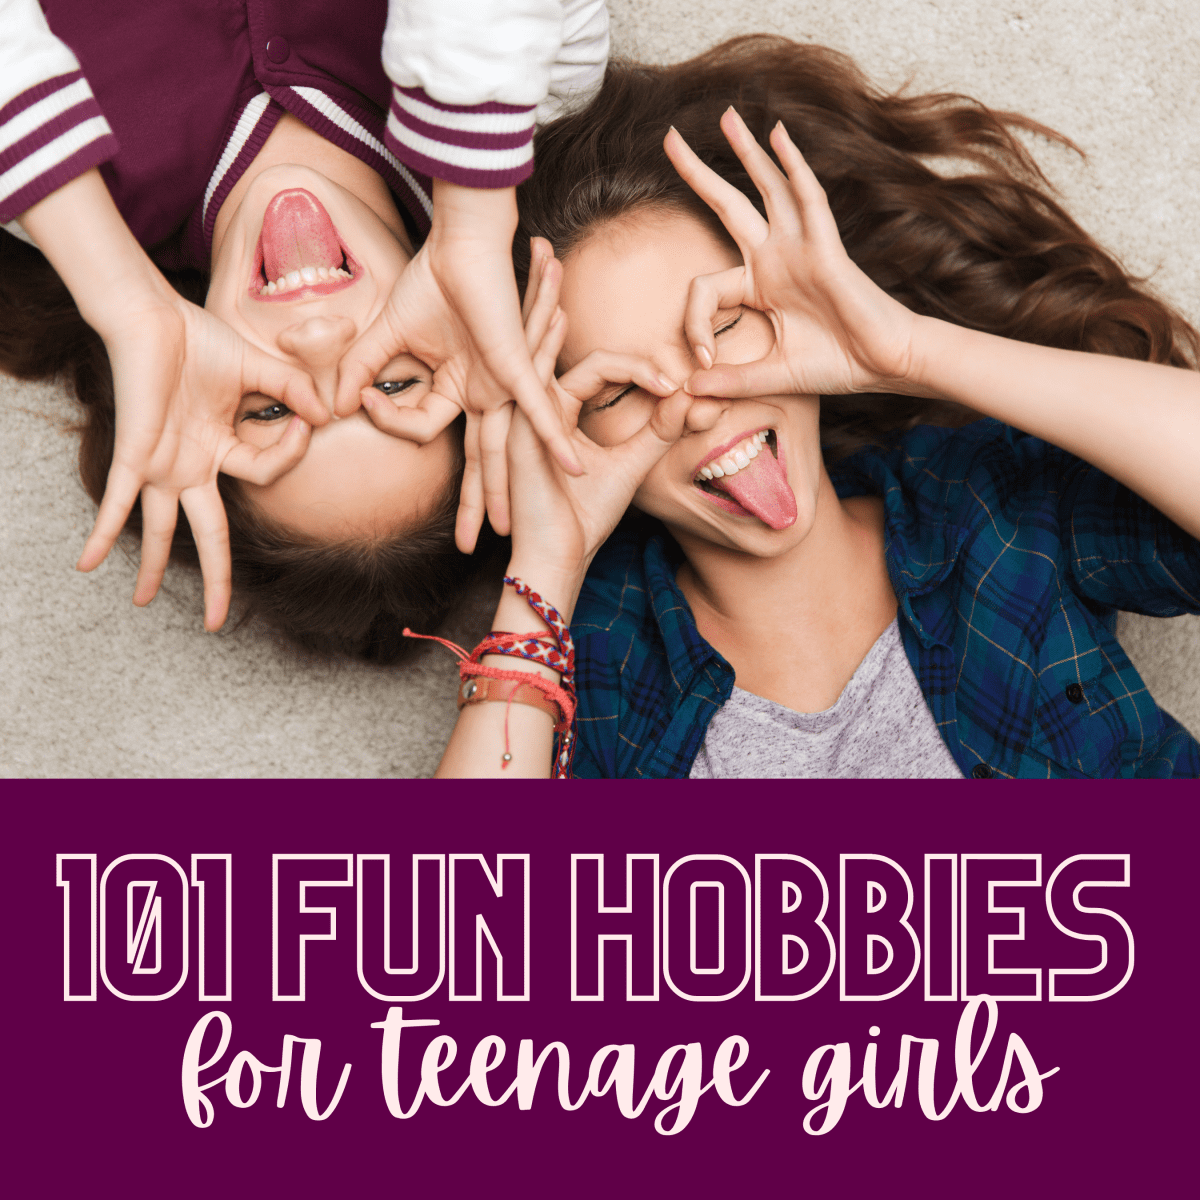 101 Fun Hobbies for Teenage Girls - WeHaveKids